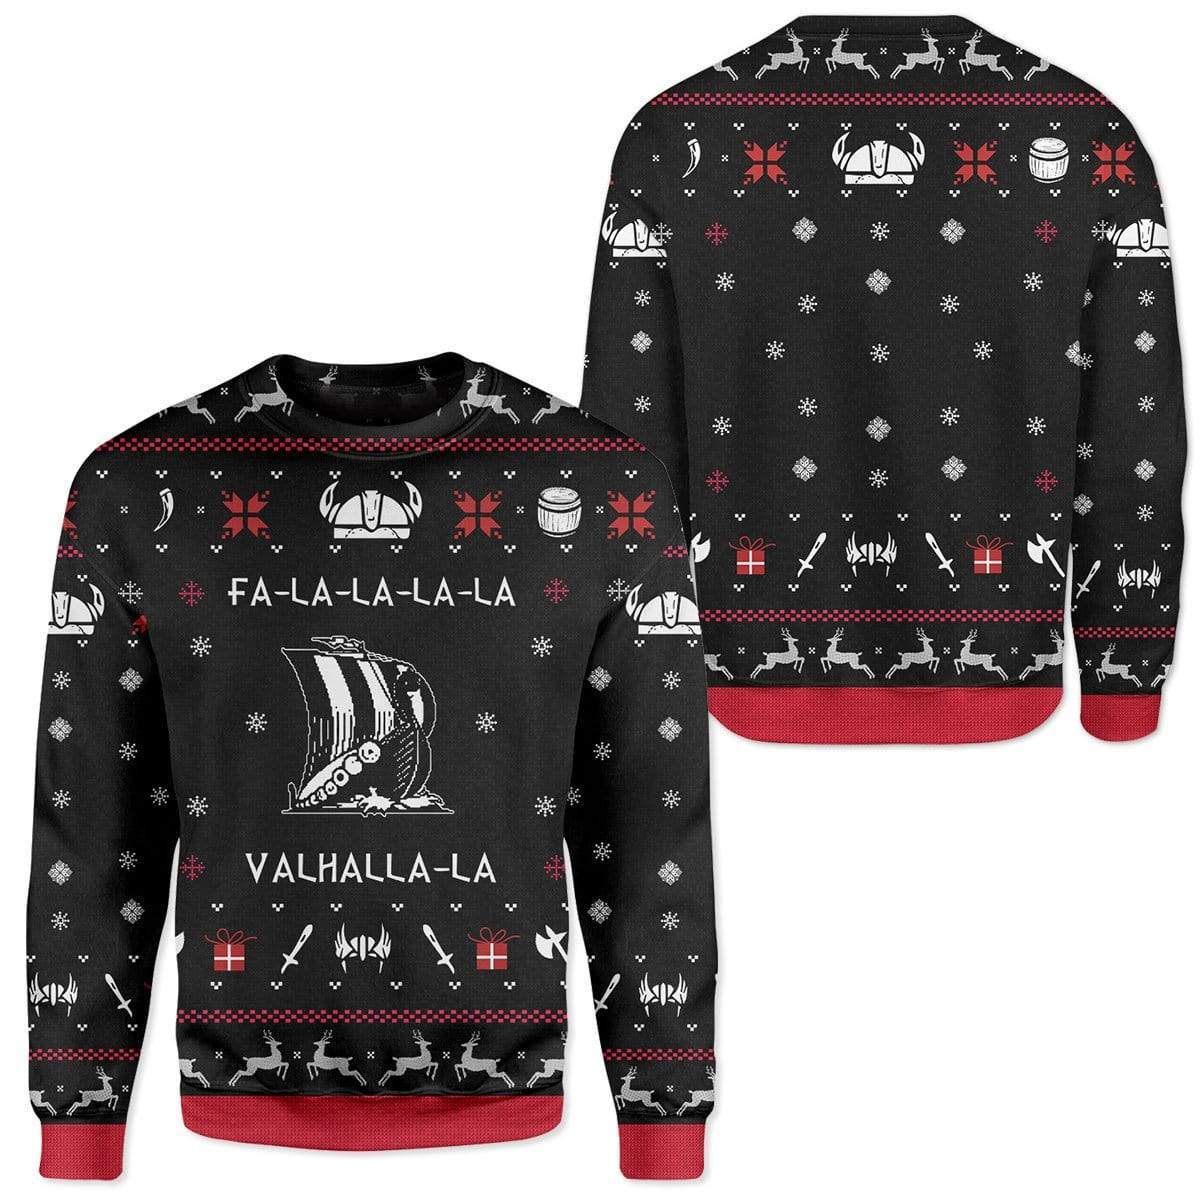 Custom T-shirt - Long Sleeves Ugly Christmas Valhalla Viking Christmas Sweater Jumper HD-GH20668 Ugly Christmas Sweater 